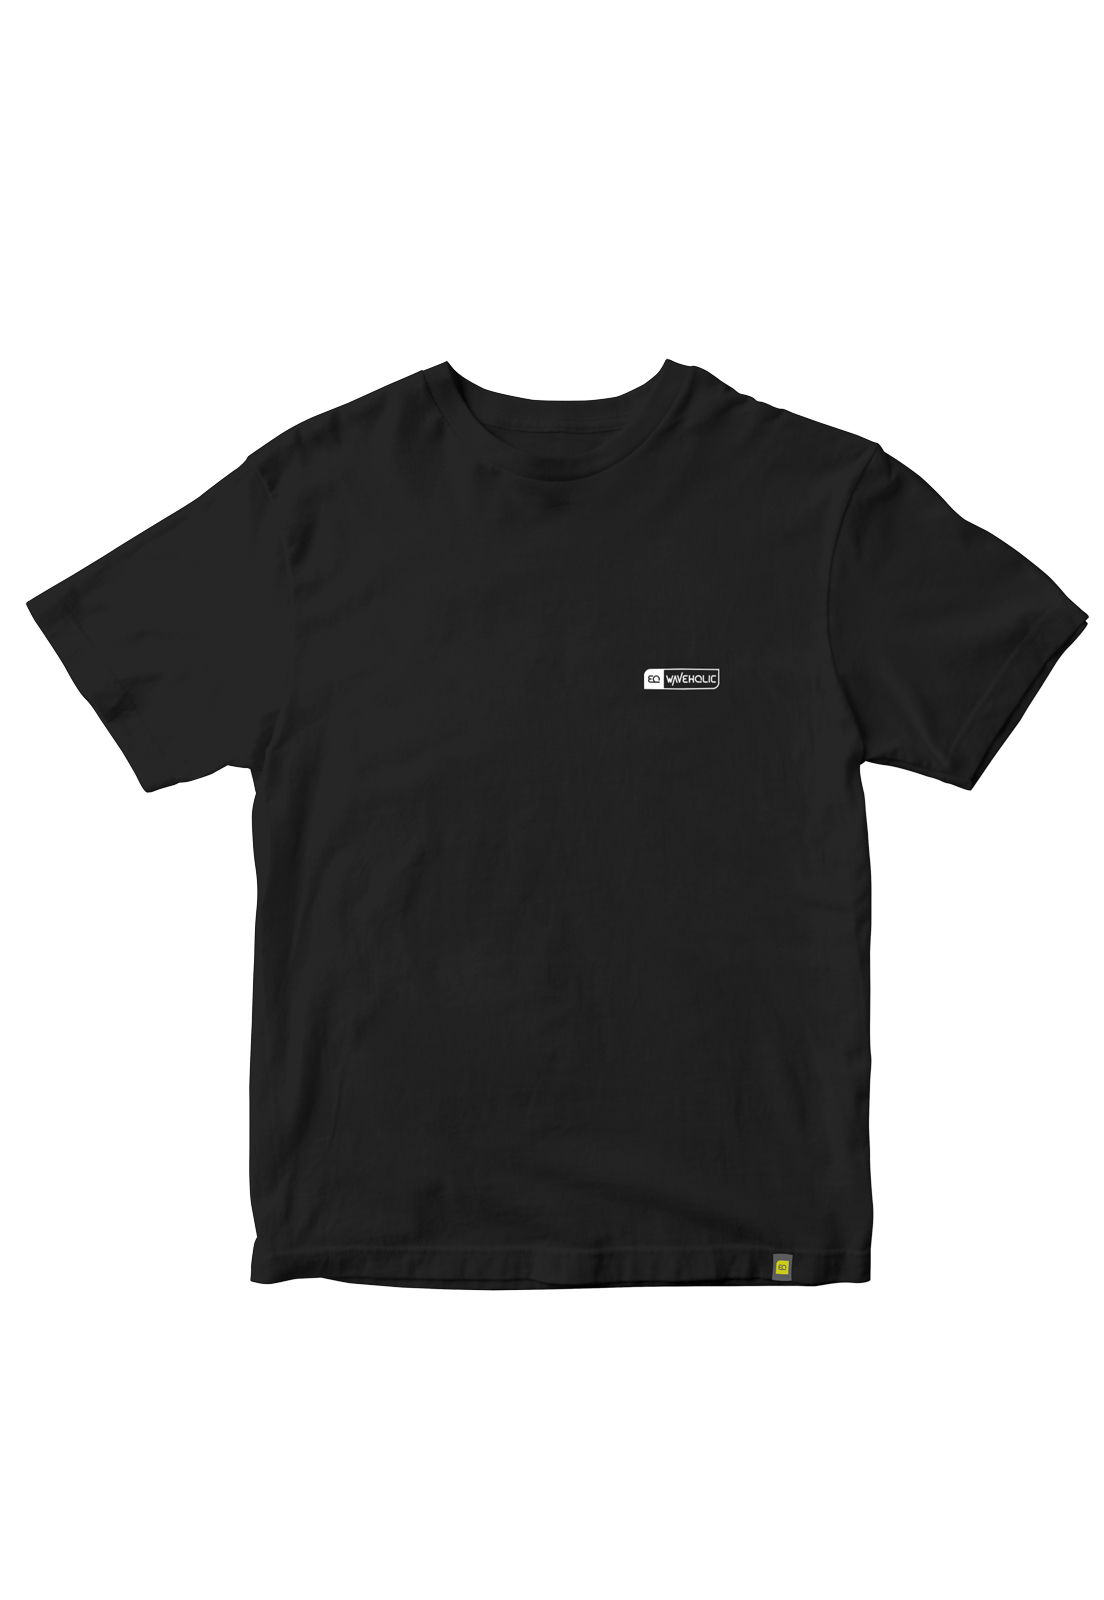 Camiseta básica sustentável preta que preserva